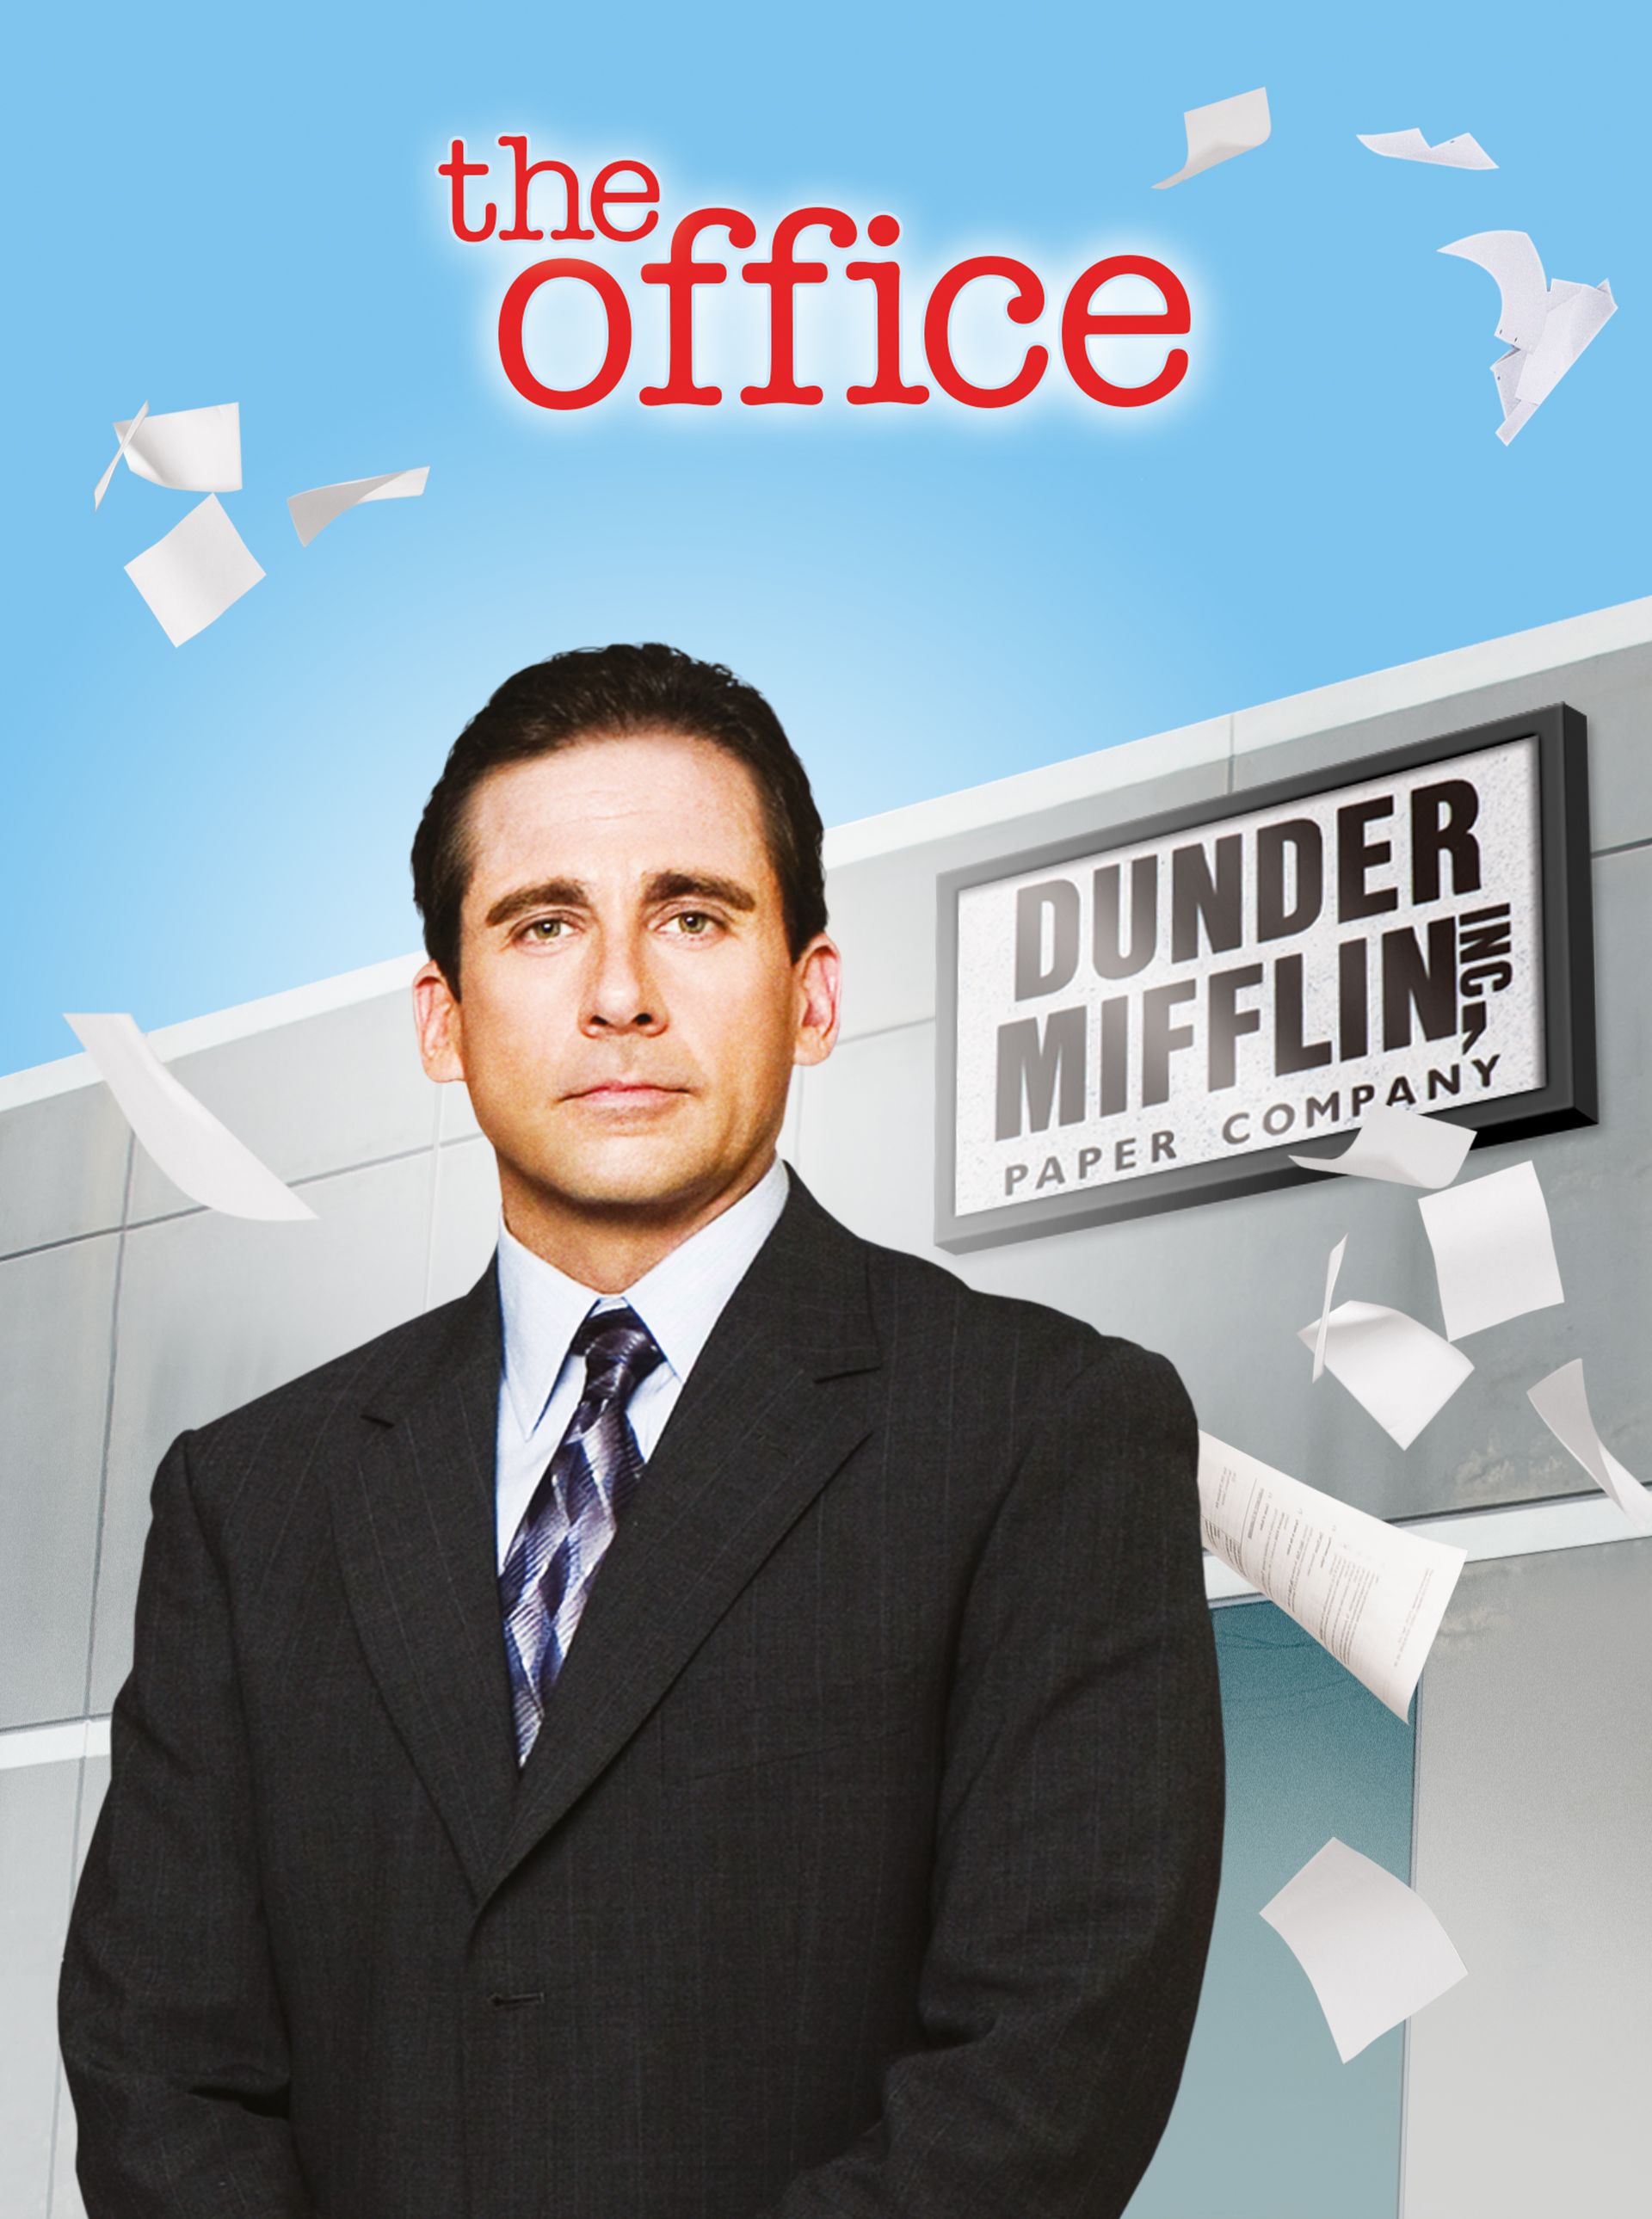 The Office (U.S.) (2004)